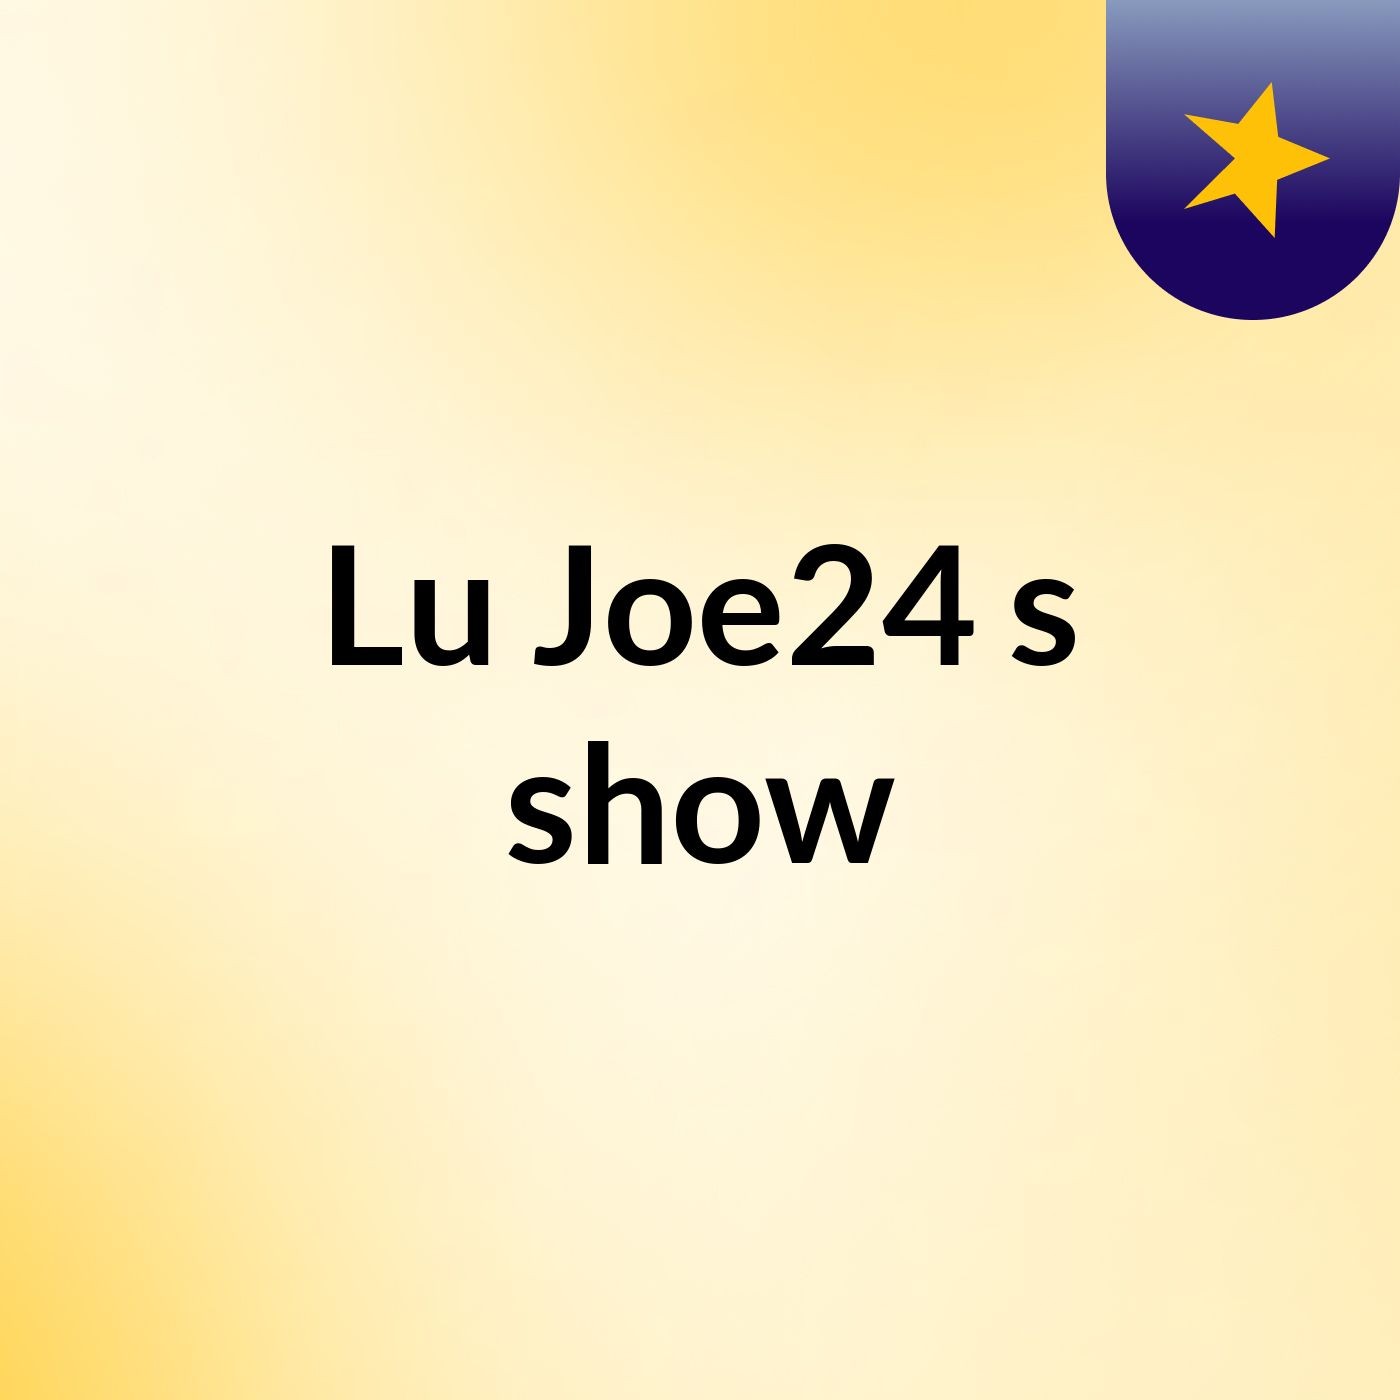 Lu Joe24's show